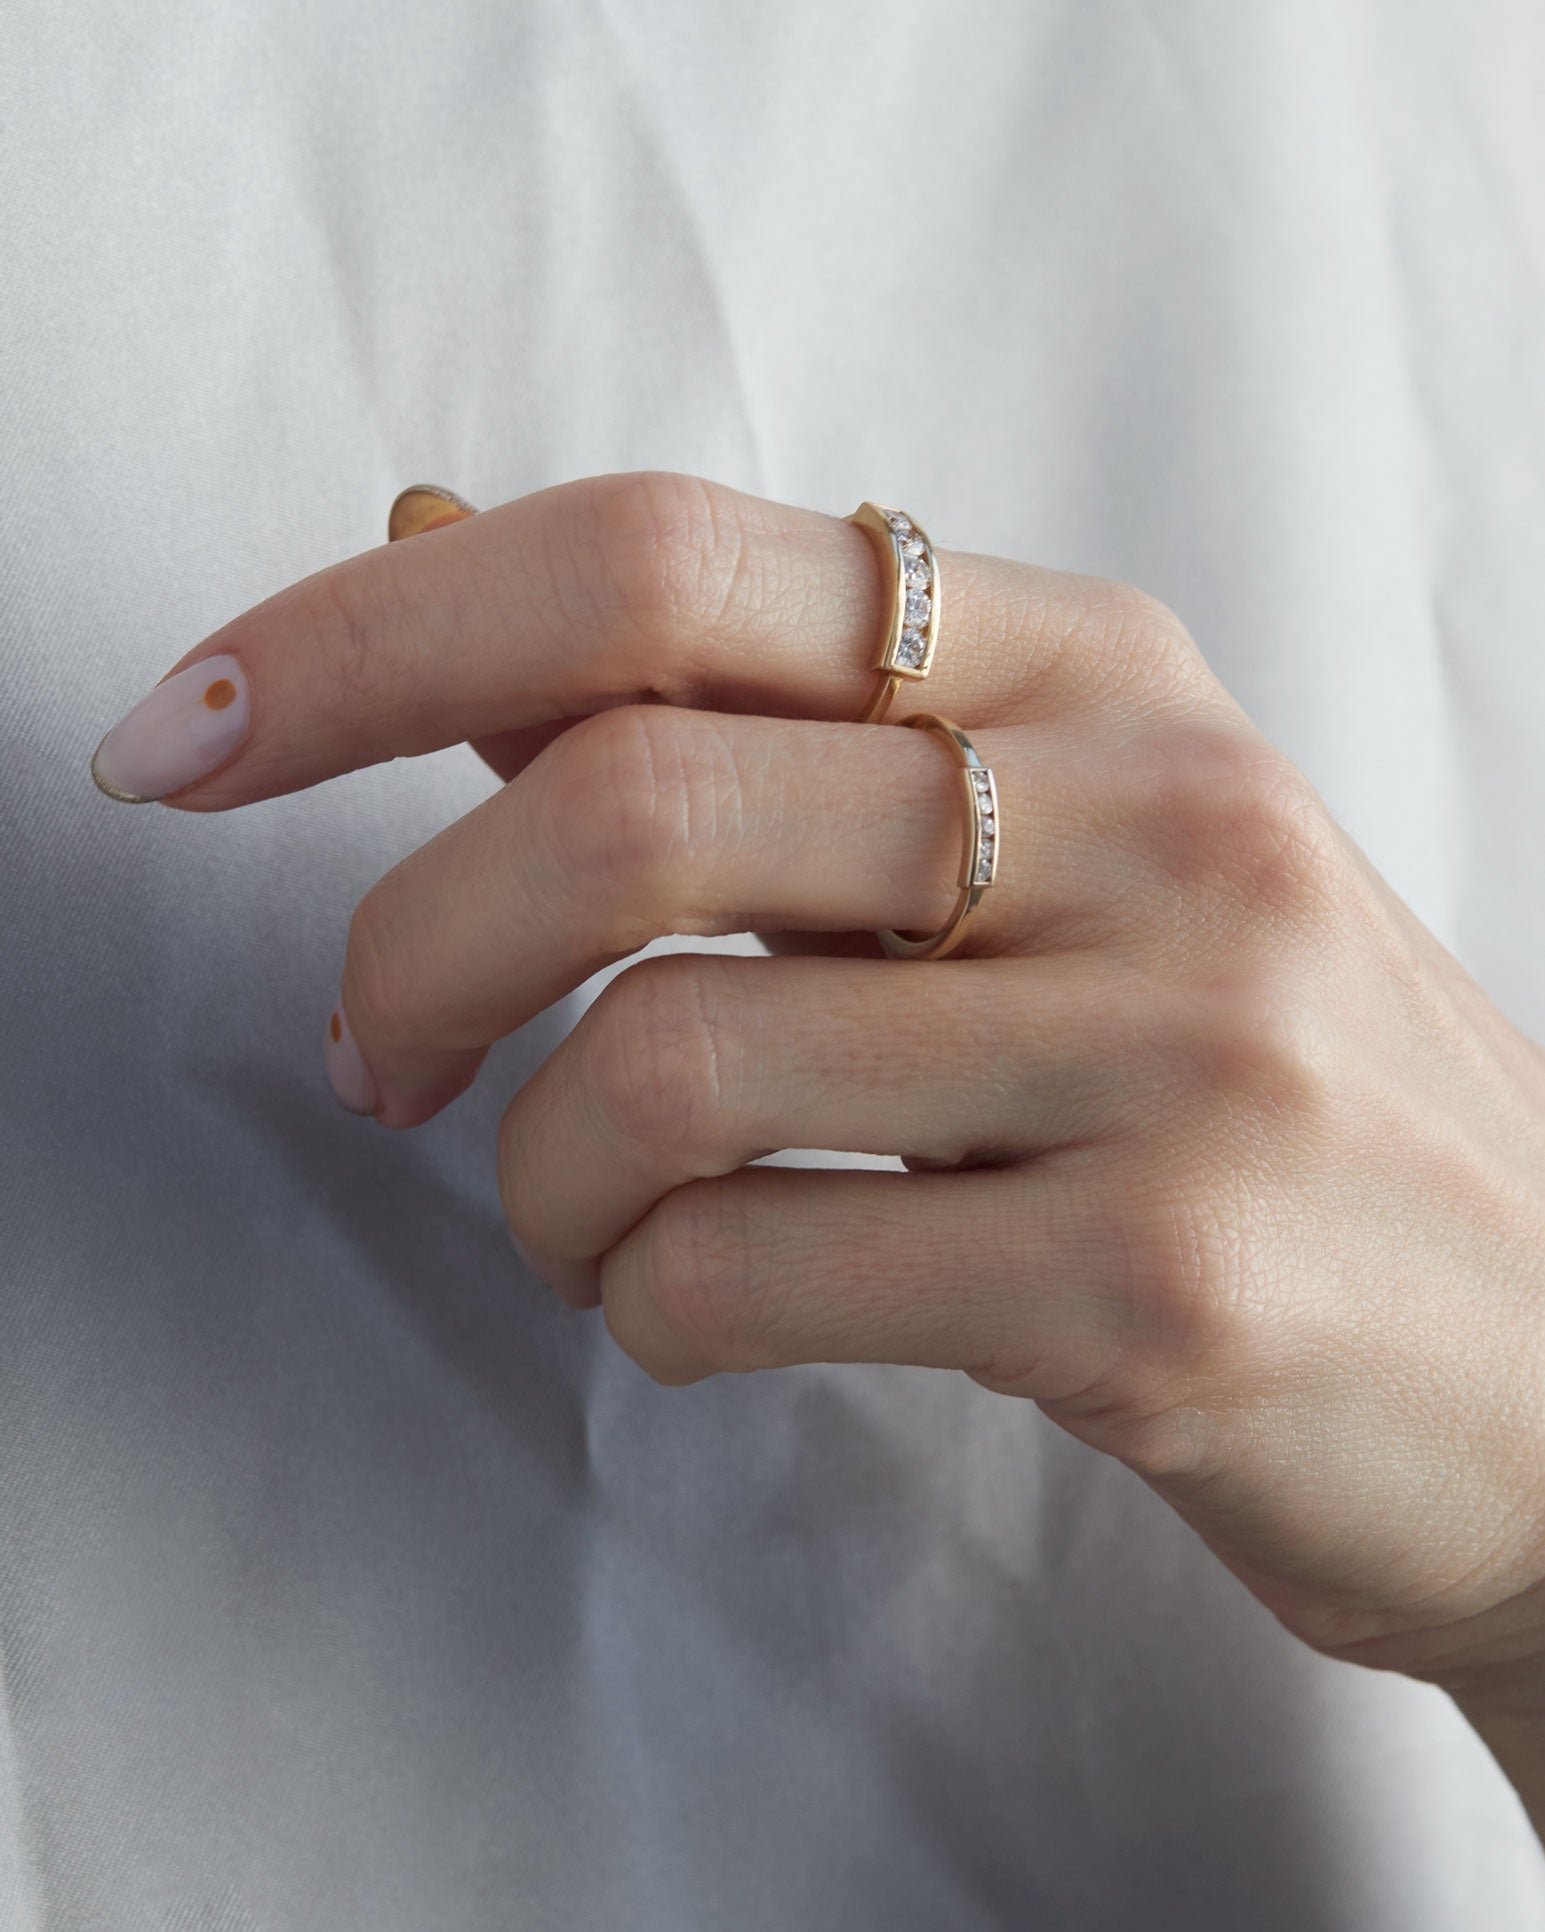 Loyalist Ring - Petite Diamond One Of A Kind